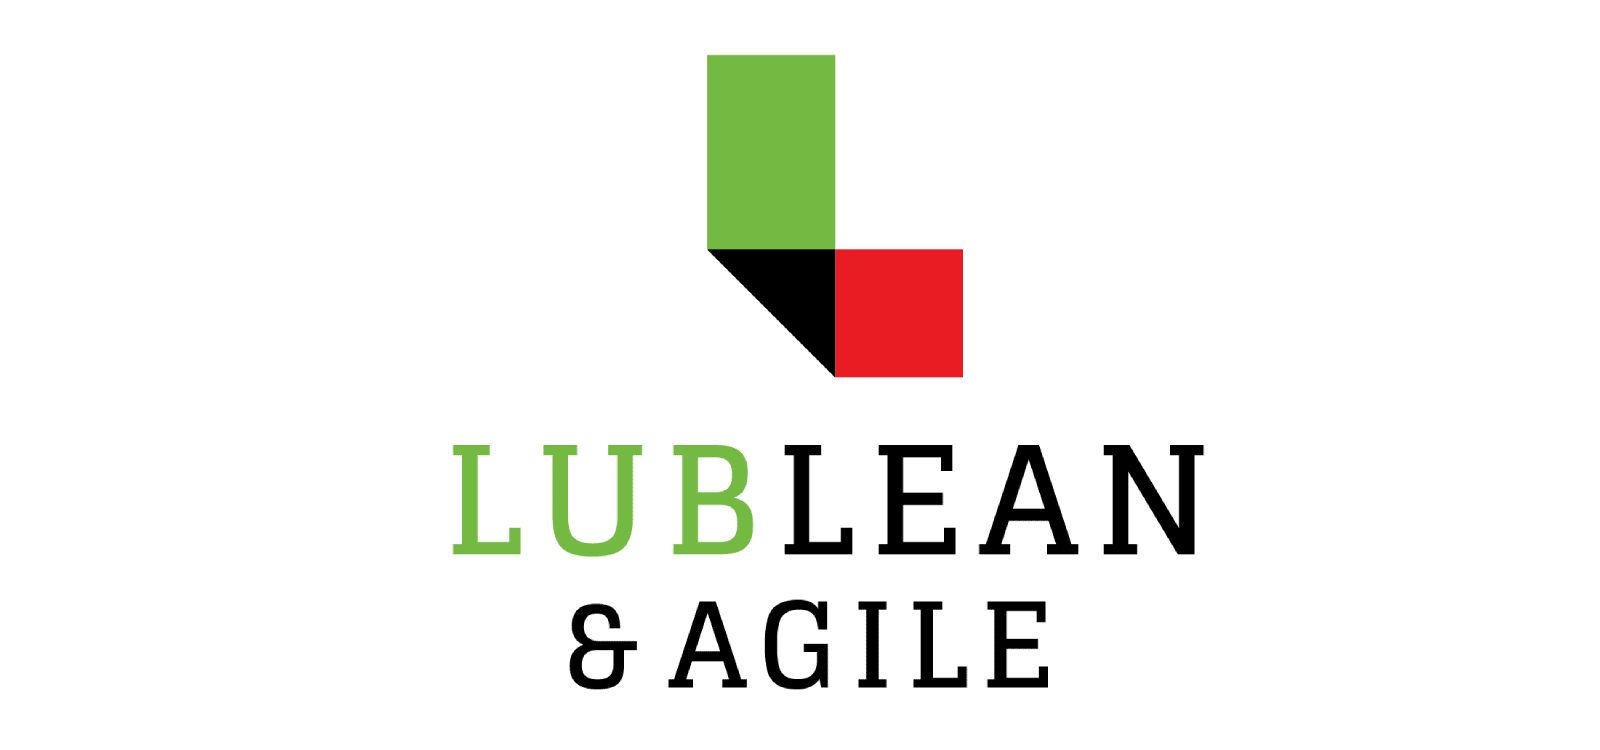 LubLean and Agile logo